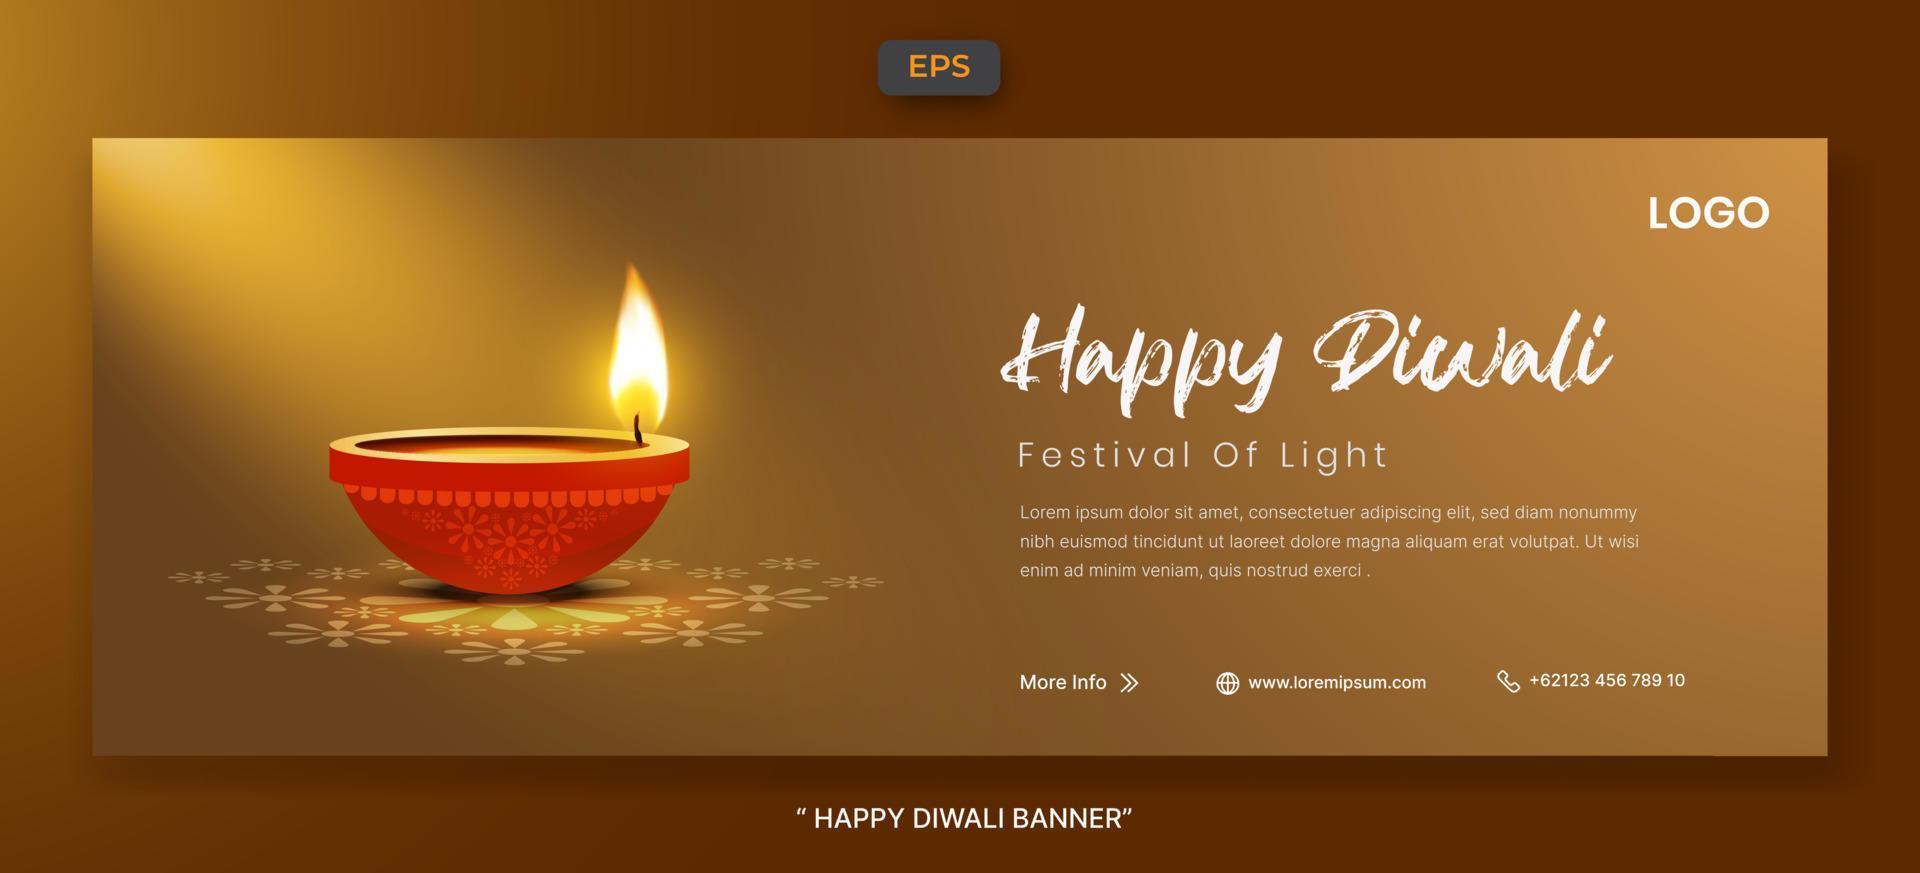 feliz festival de luces de diwali con plantilla de banner web de elemento de lámpara de aceite realista vector